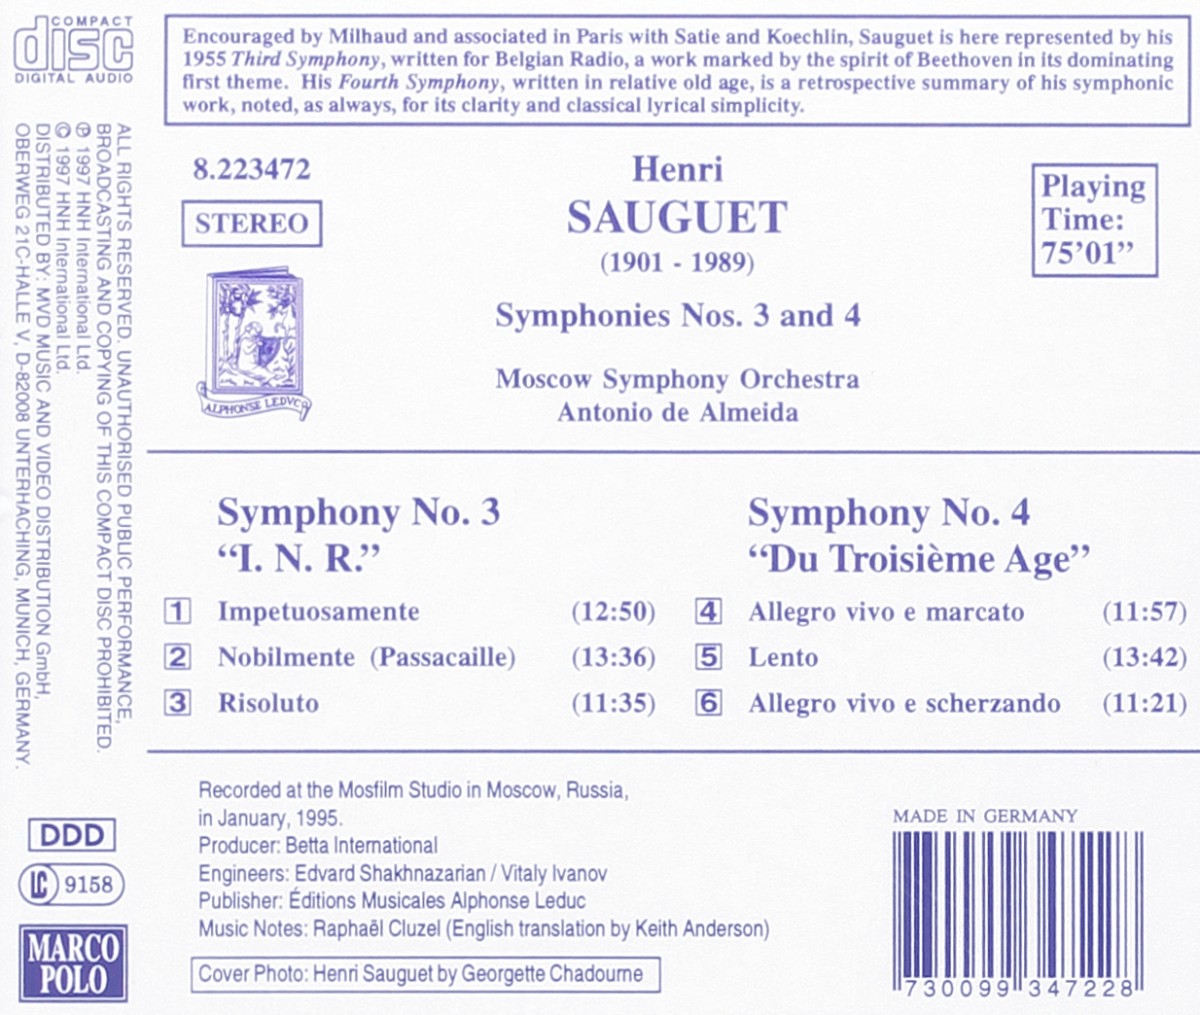 sauguet-symphonies-3-4-marco-polo-verso